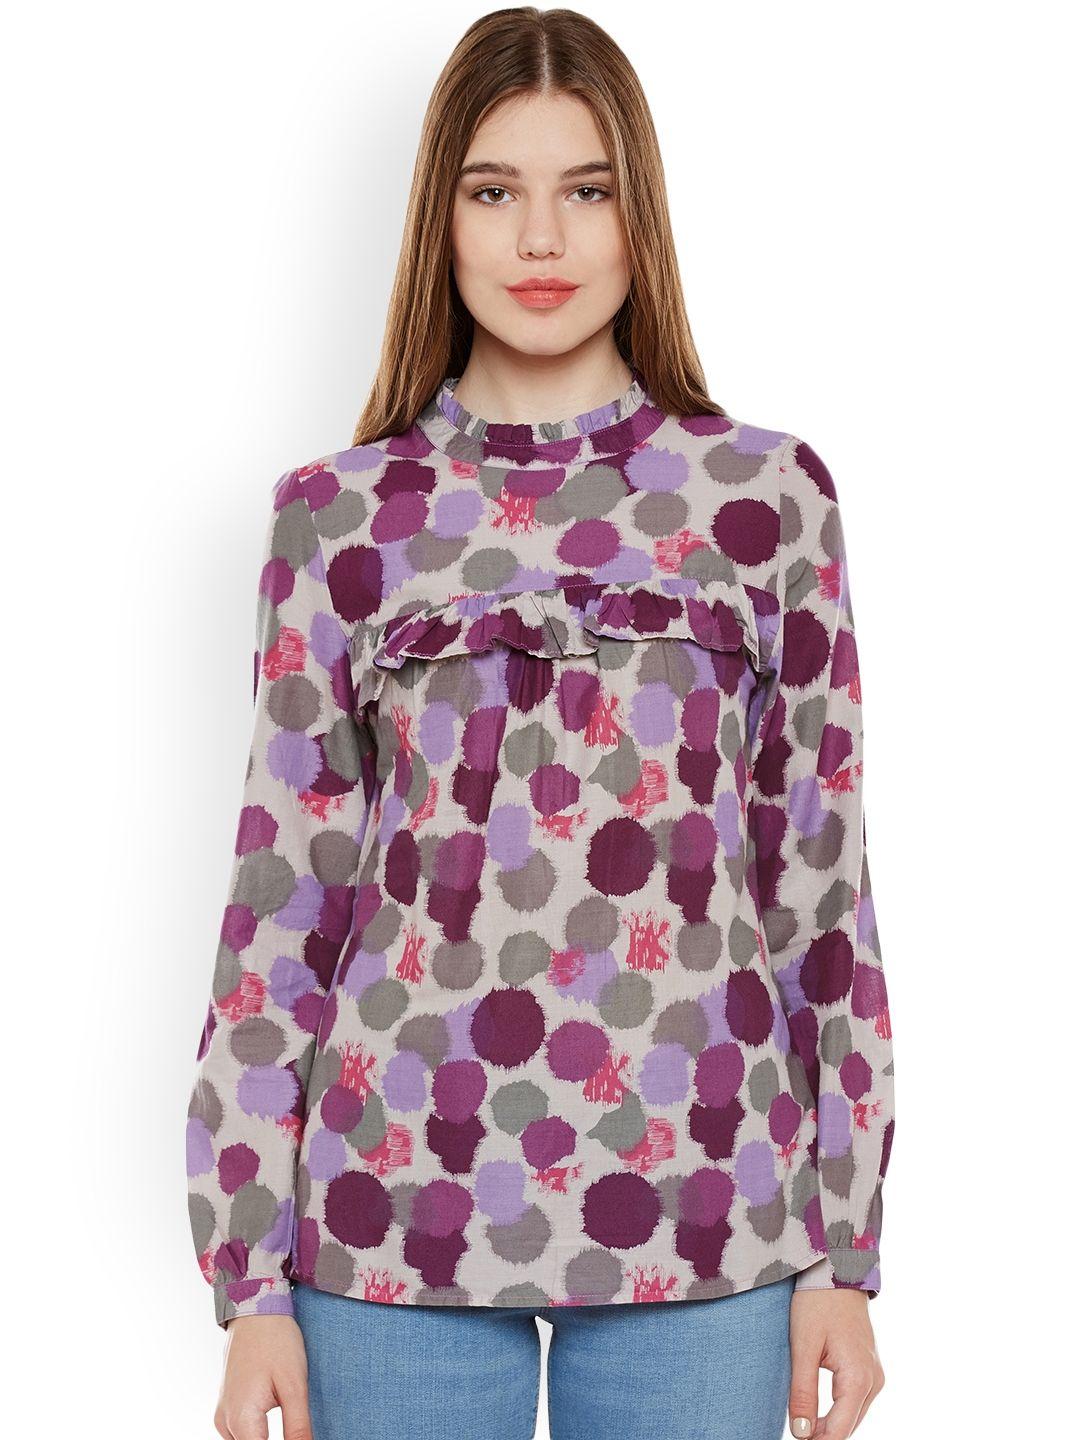 oxolloxo women grey & purple printed pure cotton top